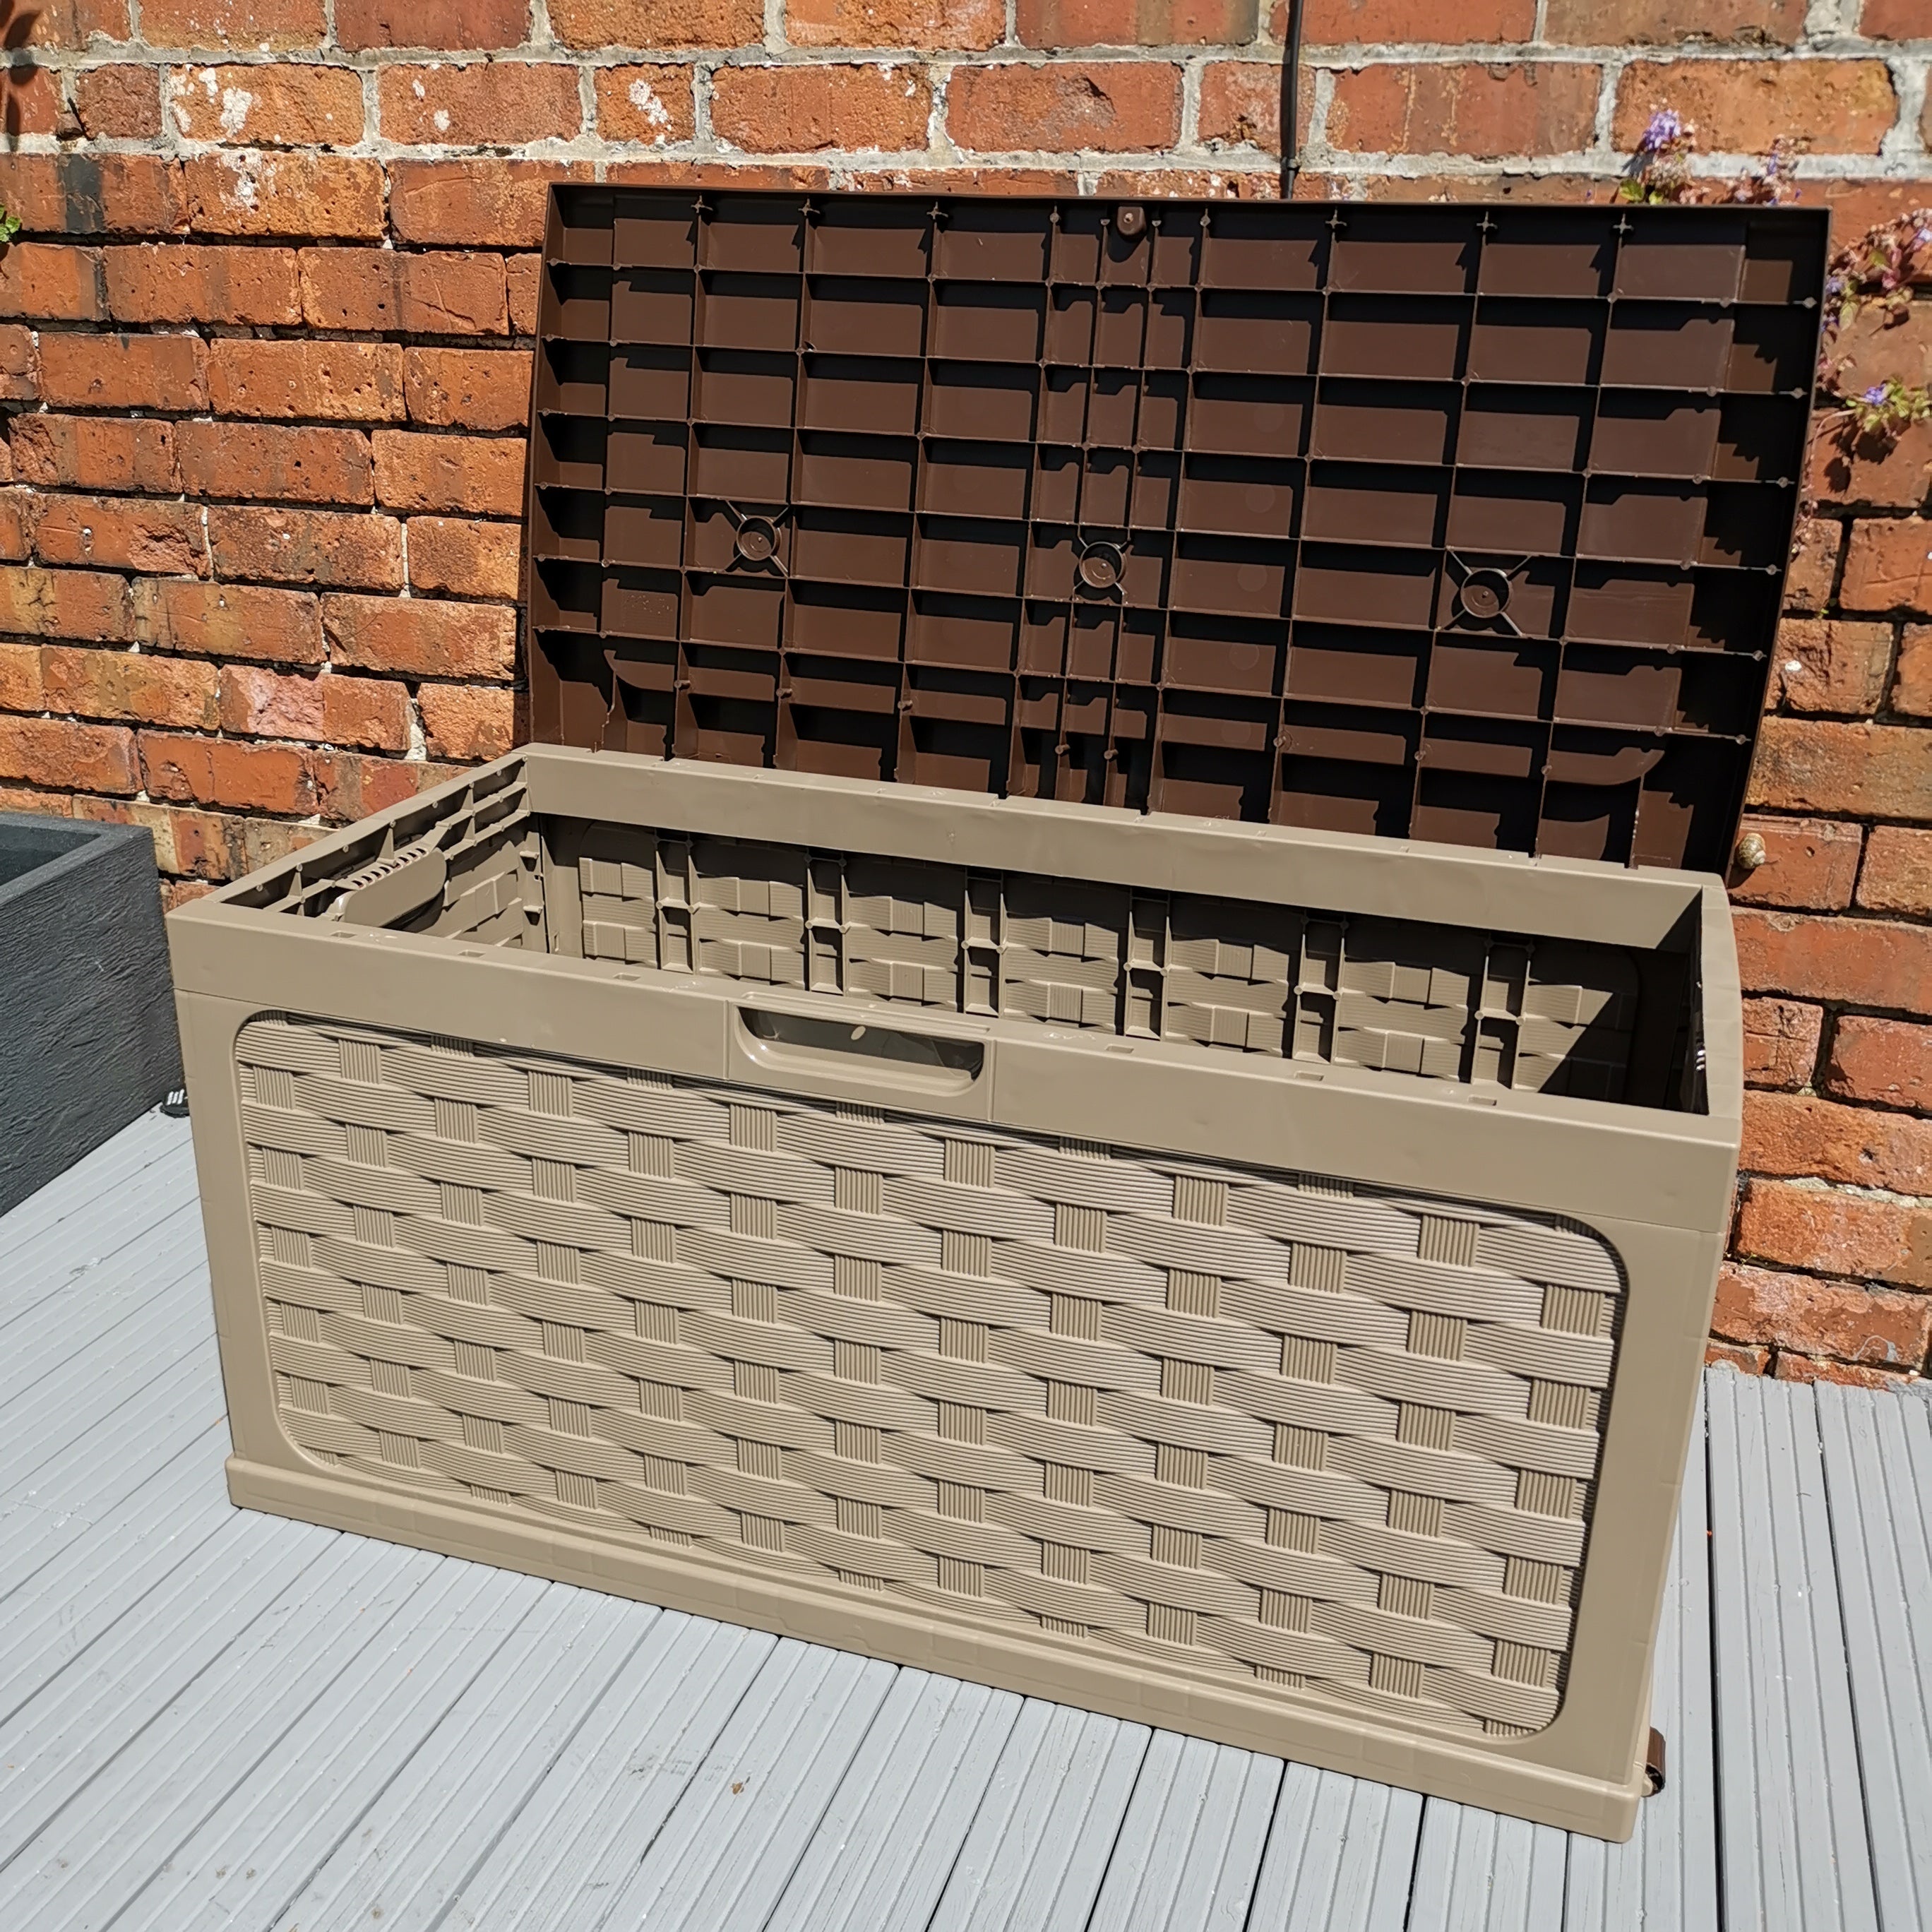 335 Litre Rattan Style Garden Cushion Storage Box with Sit on Lid – Dark Brown